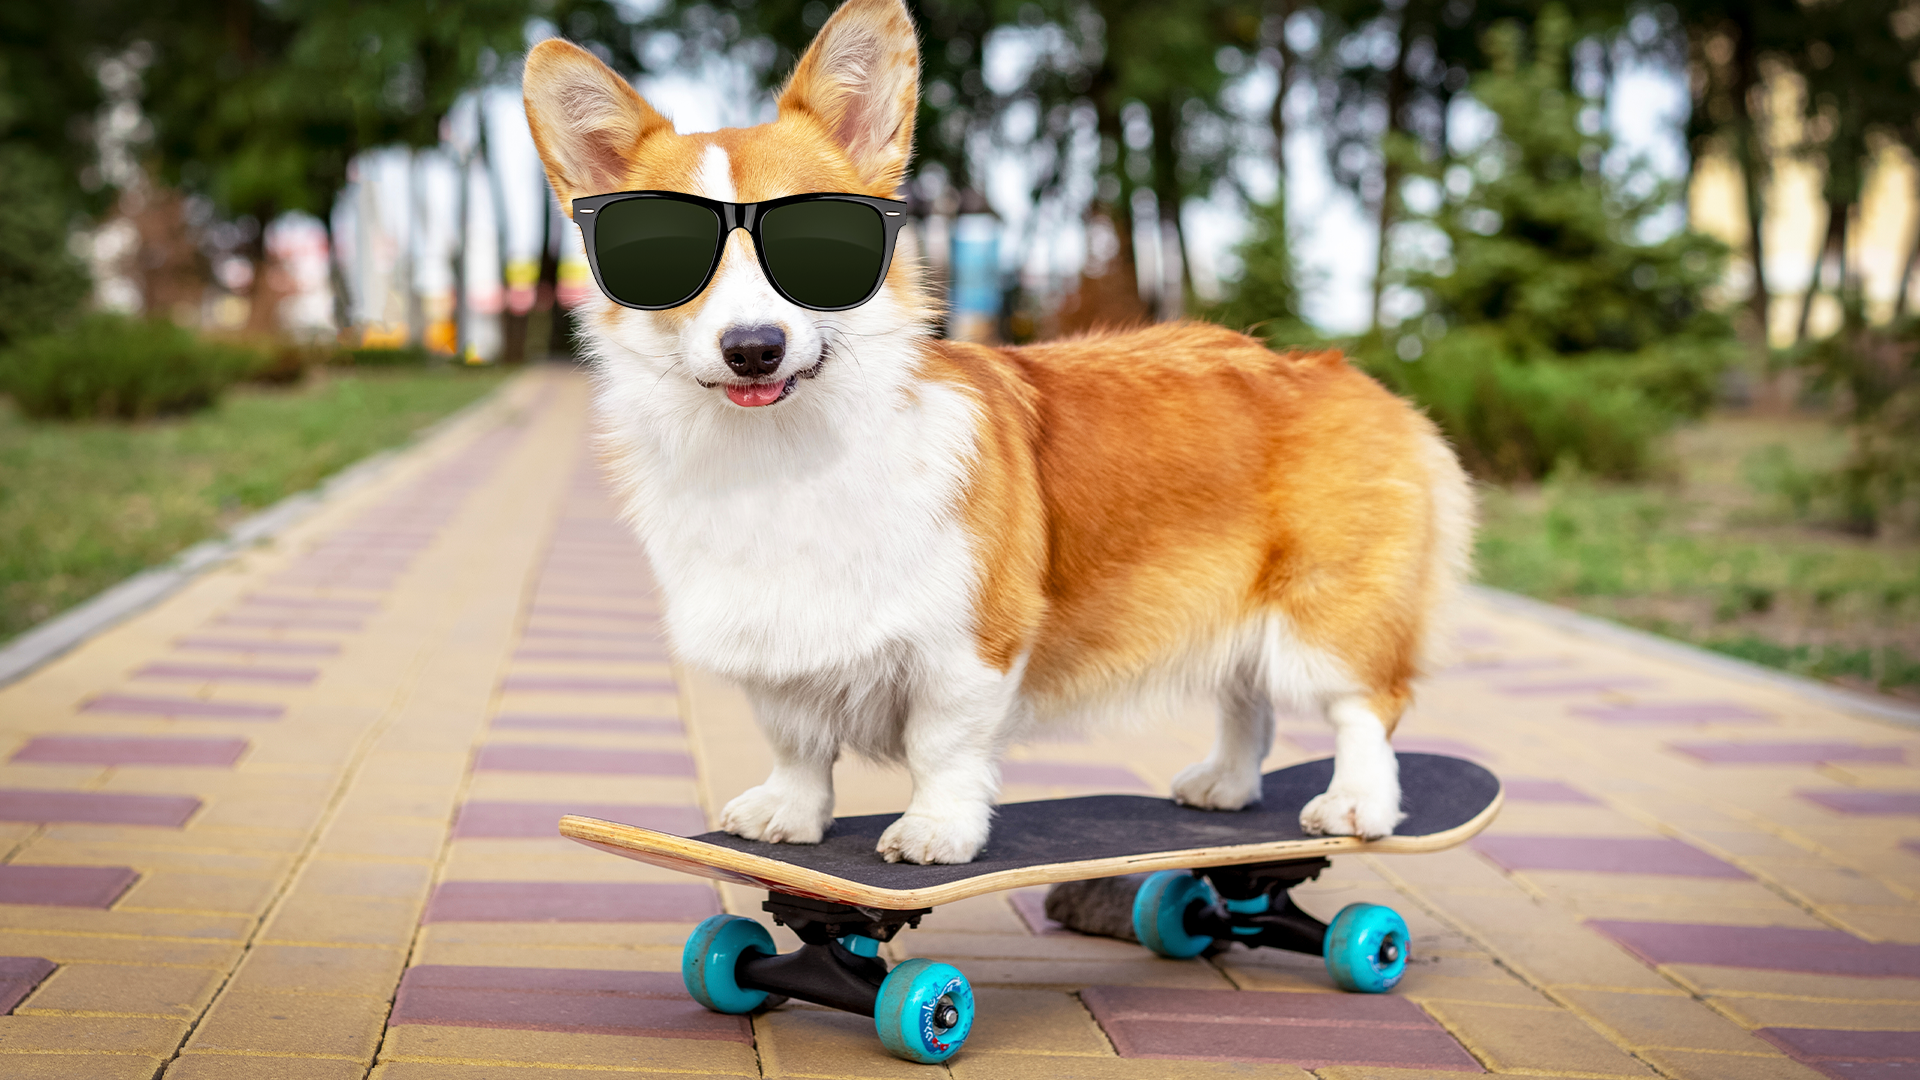 Dog on skateboard with sunglasses